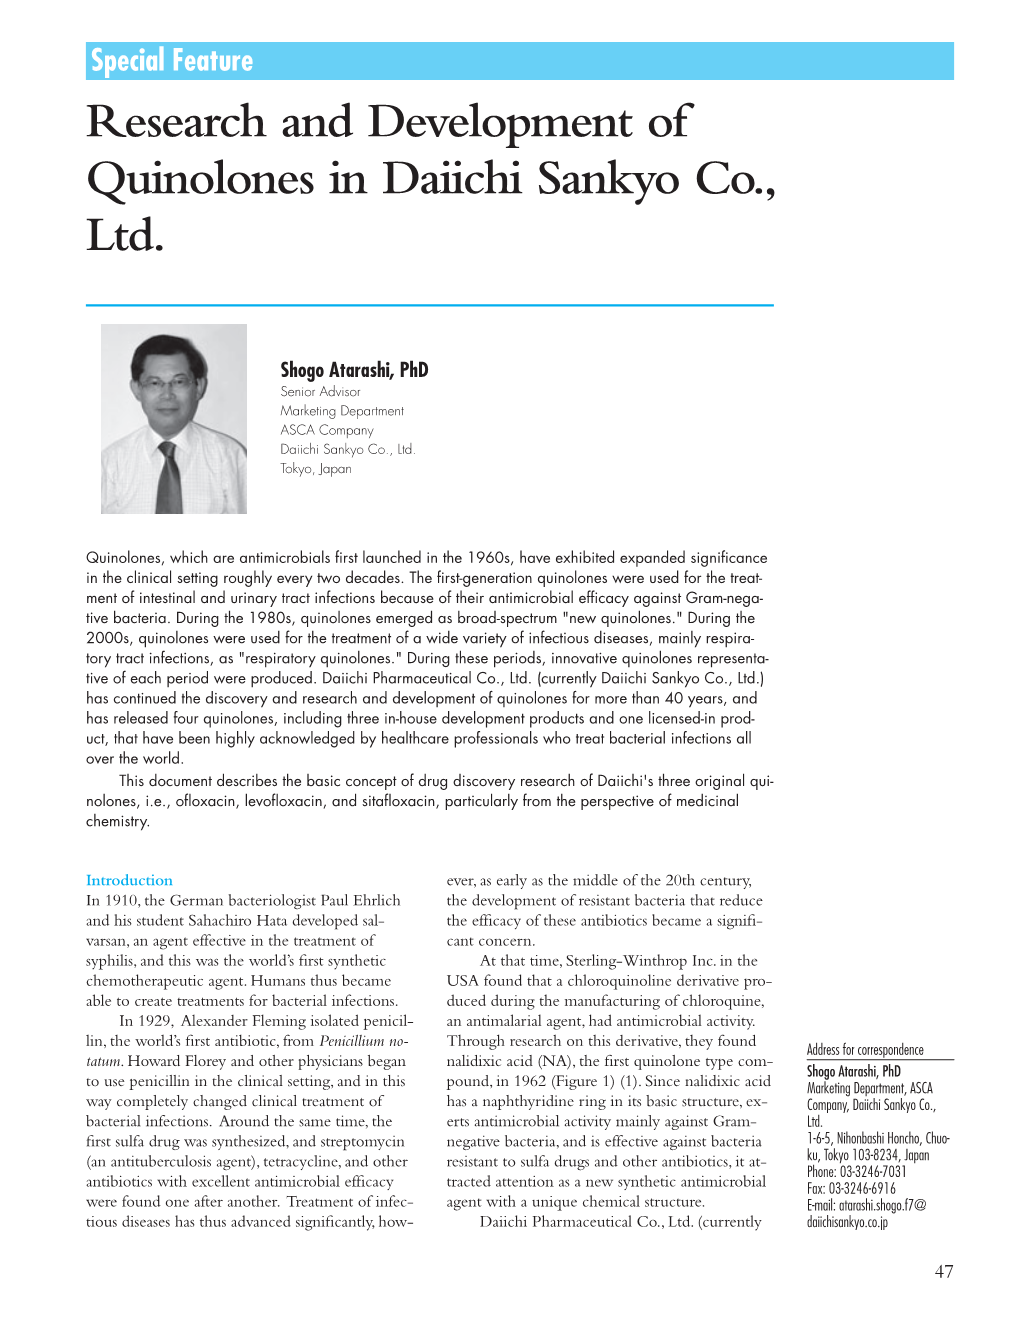 Research and Development of Quinolones in Daiichi Sankyo Co., Ltd